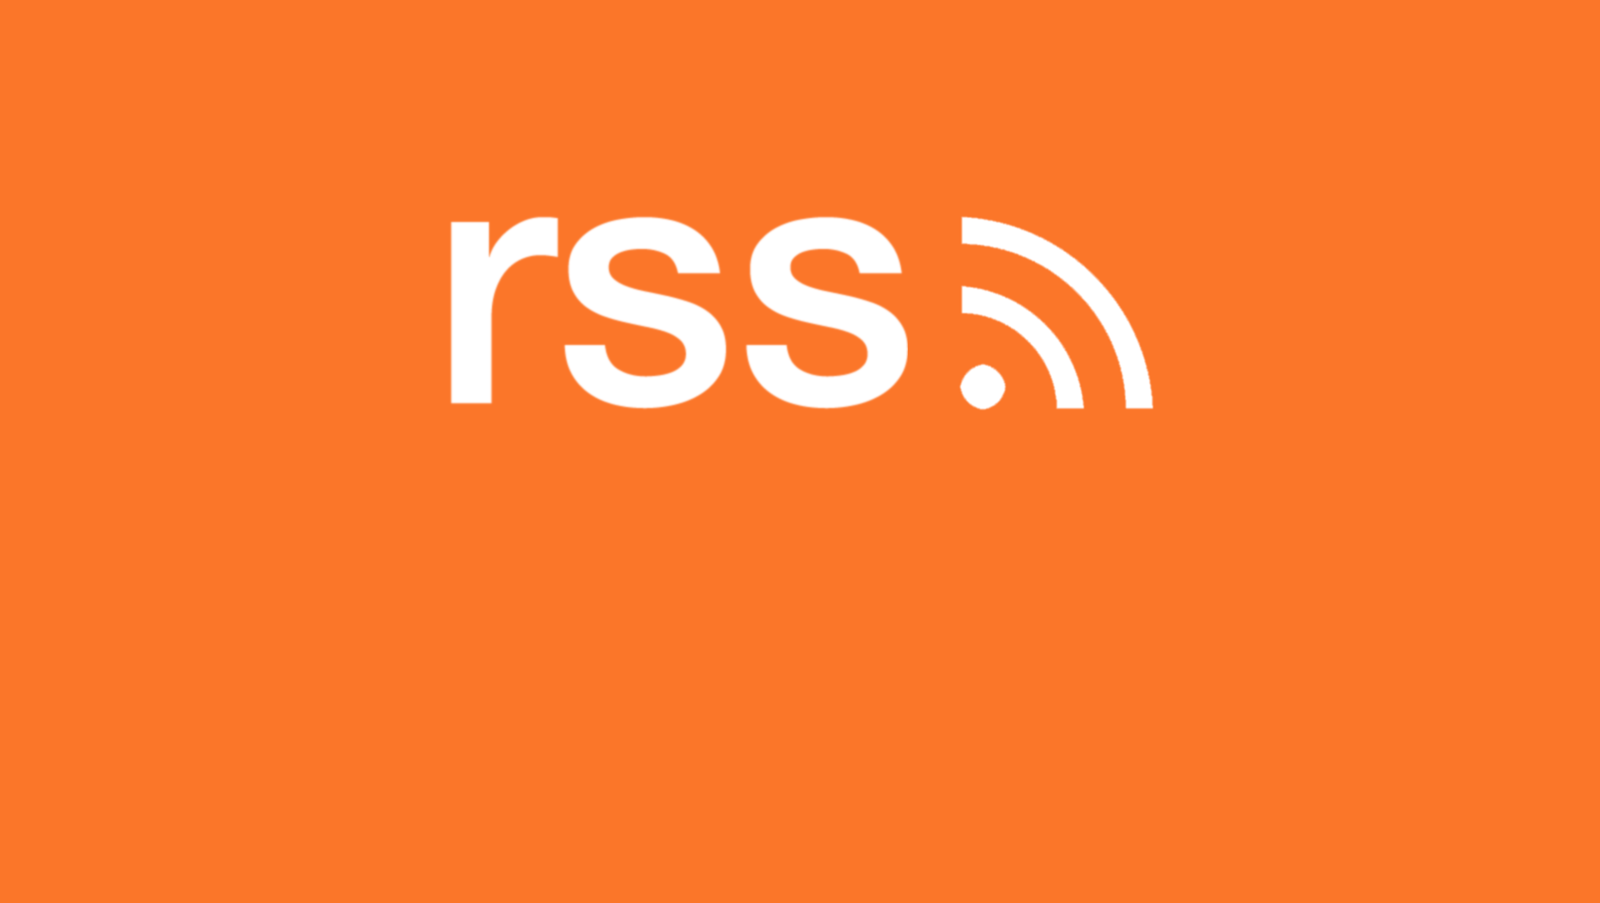 Technology: RSS